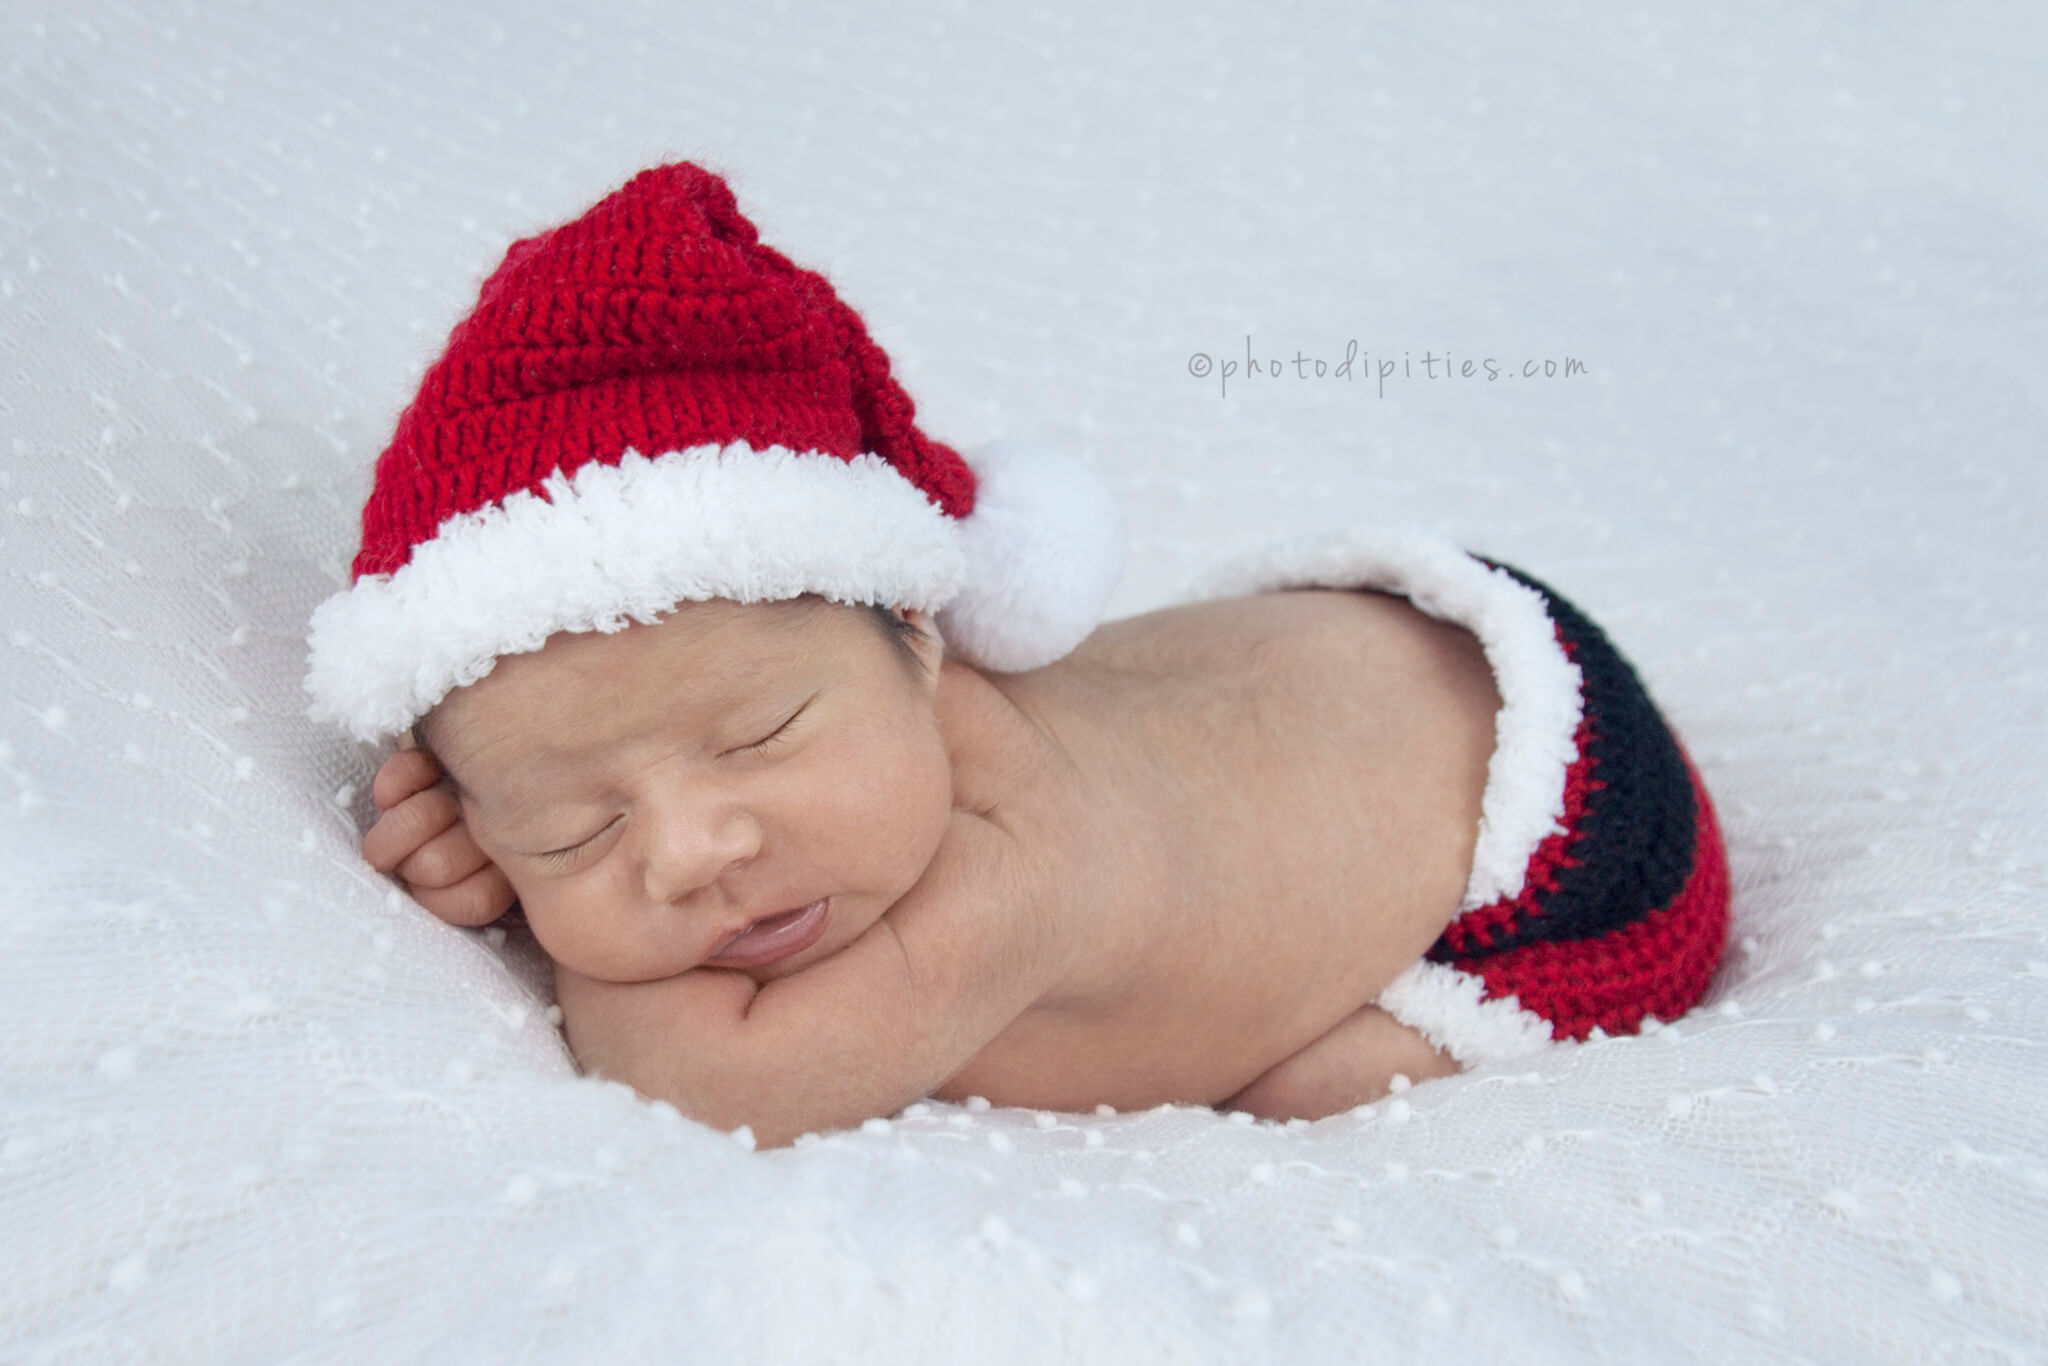 Photodipities Family - Newborn Photography